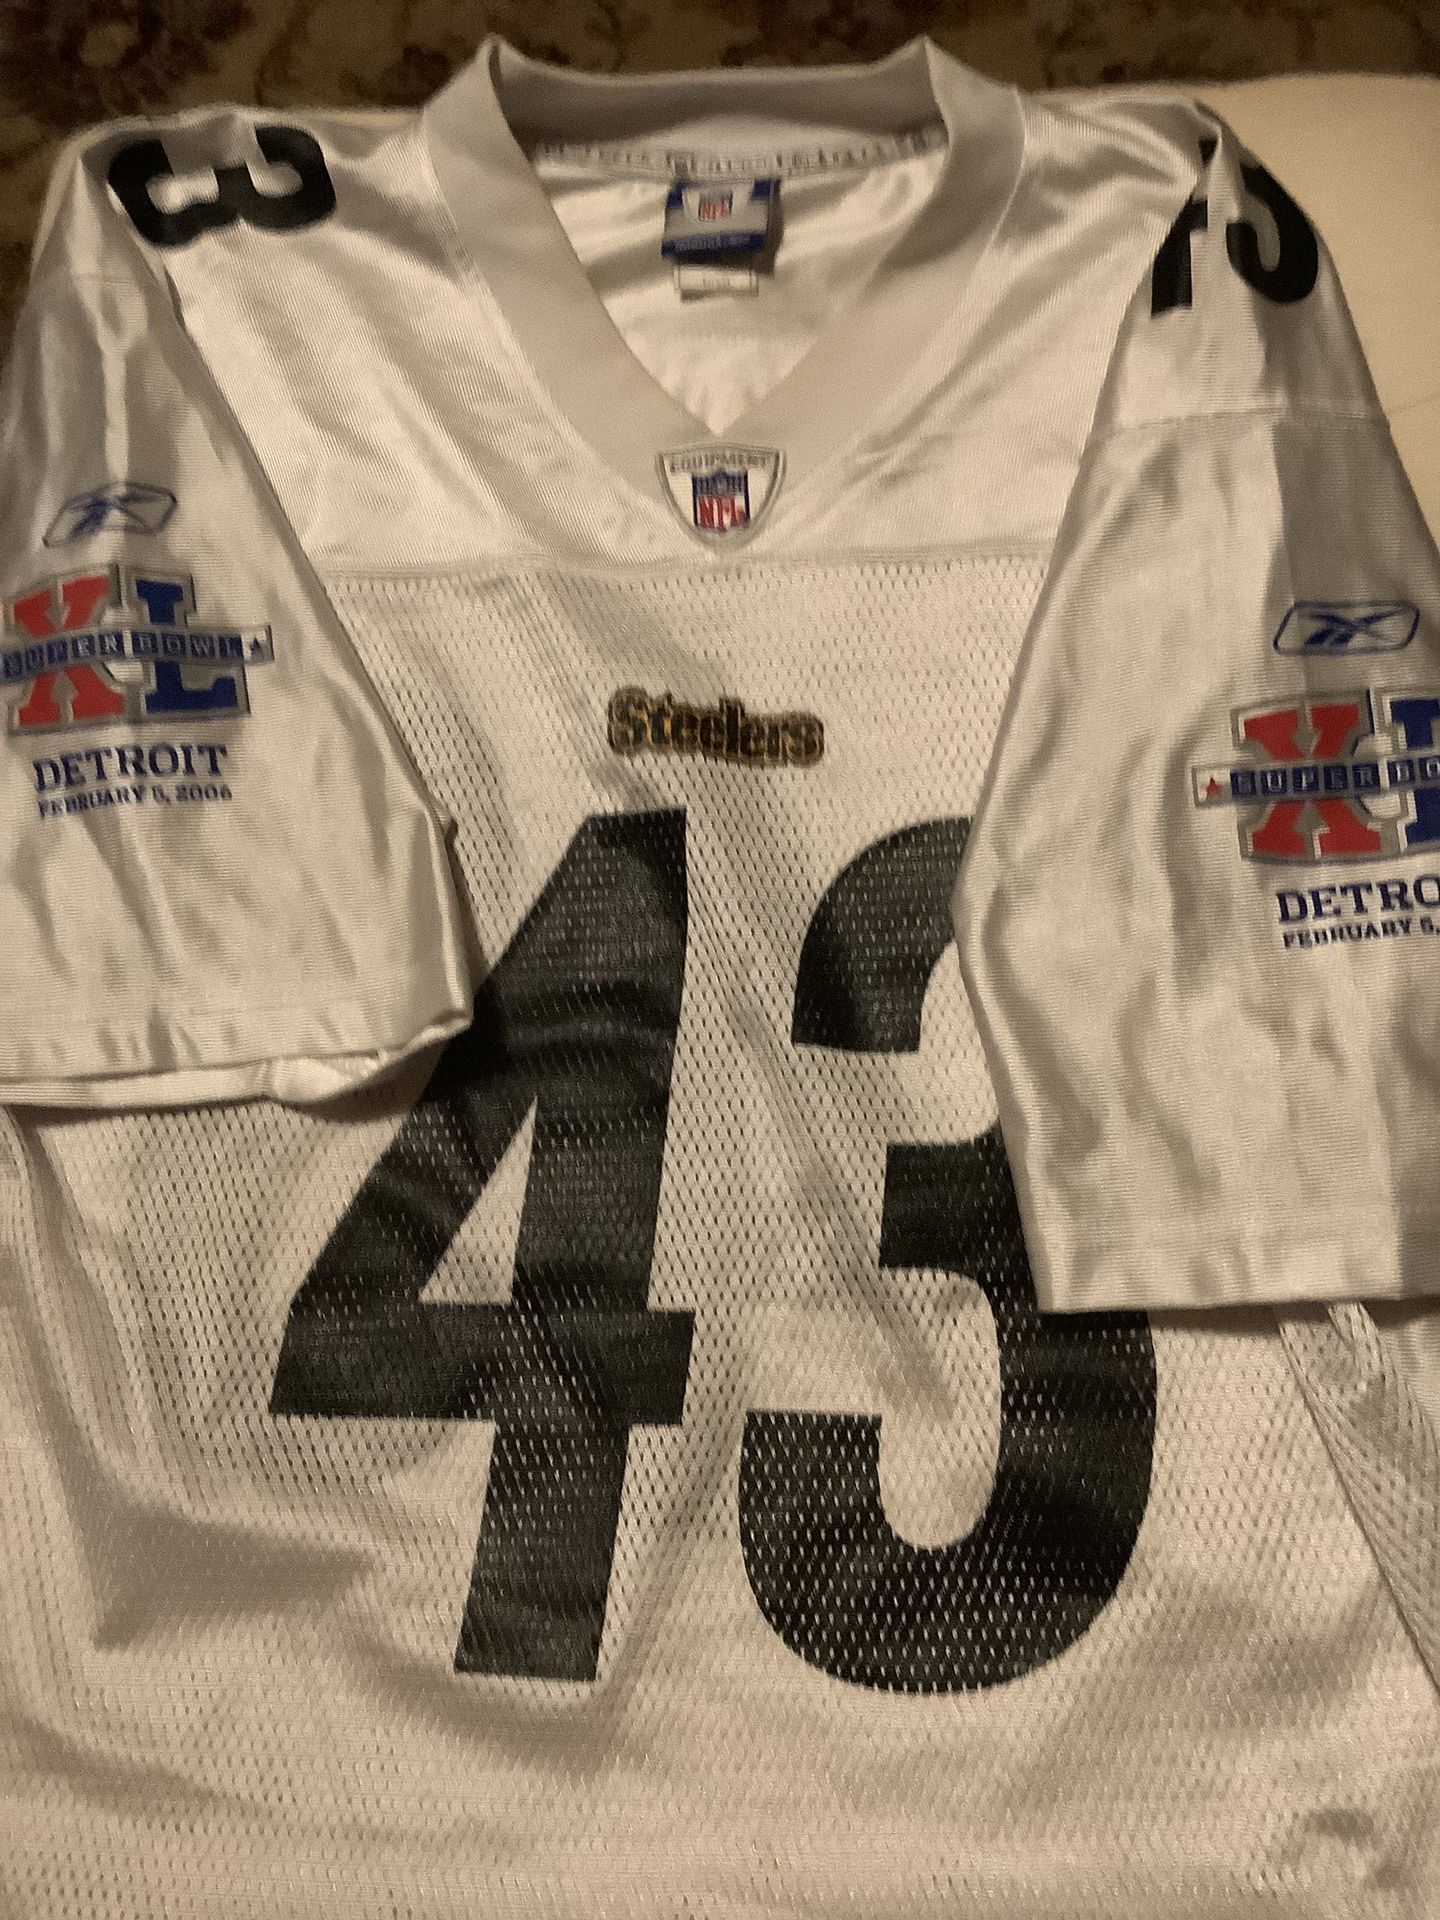 Super Bowl 2006 Steelers Jersey